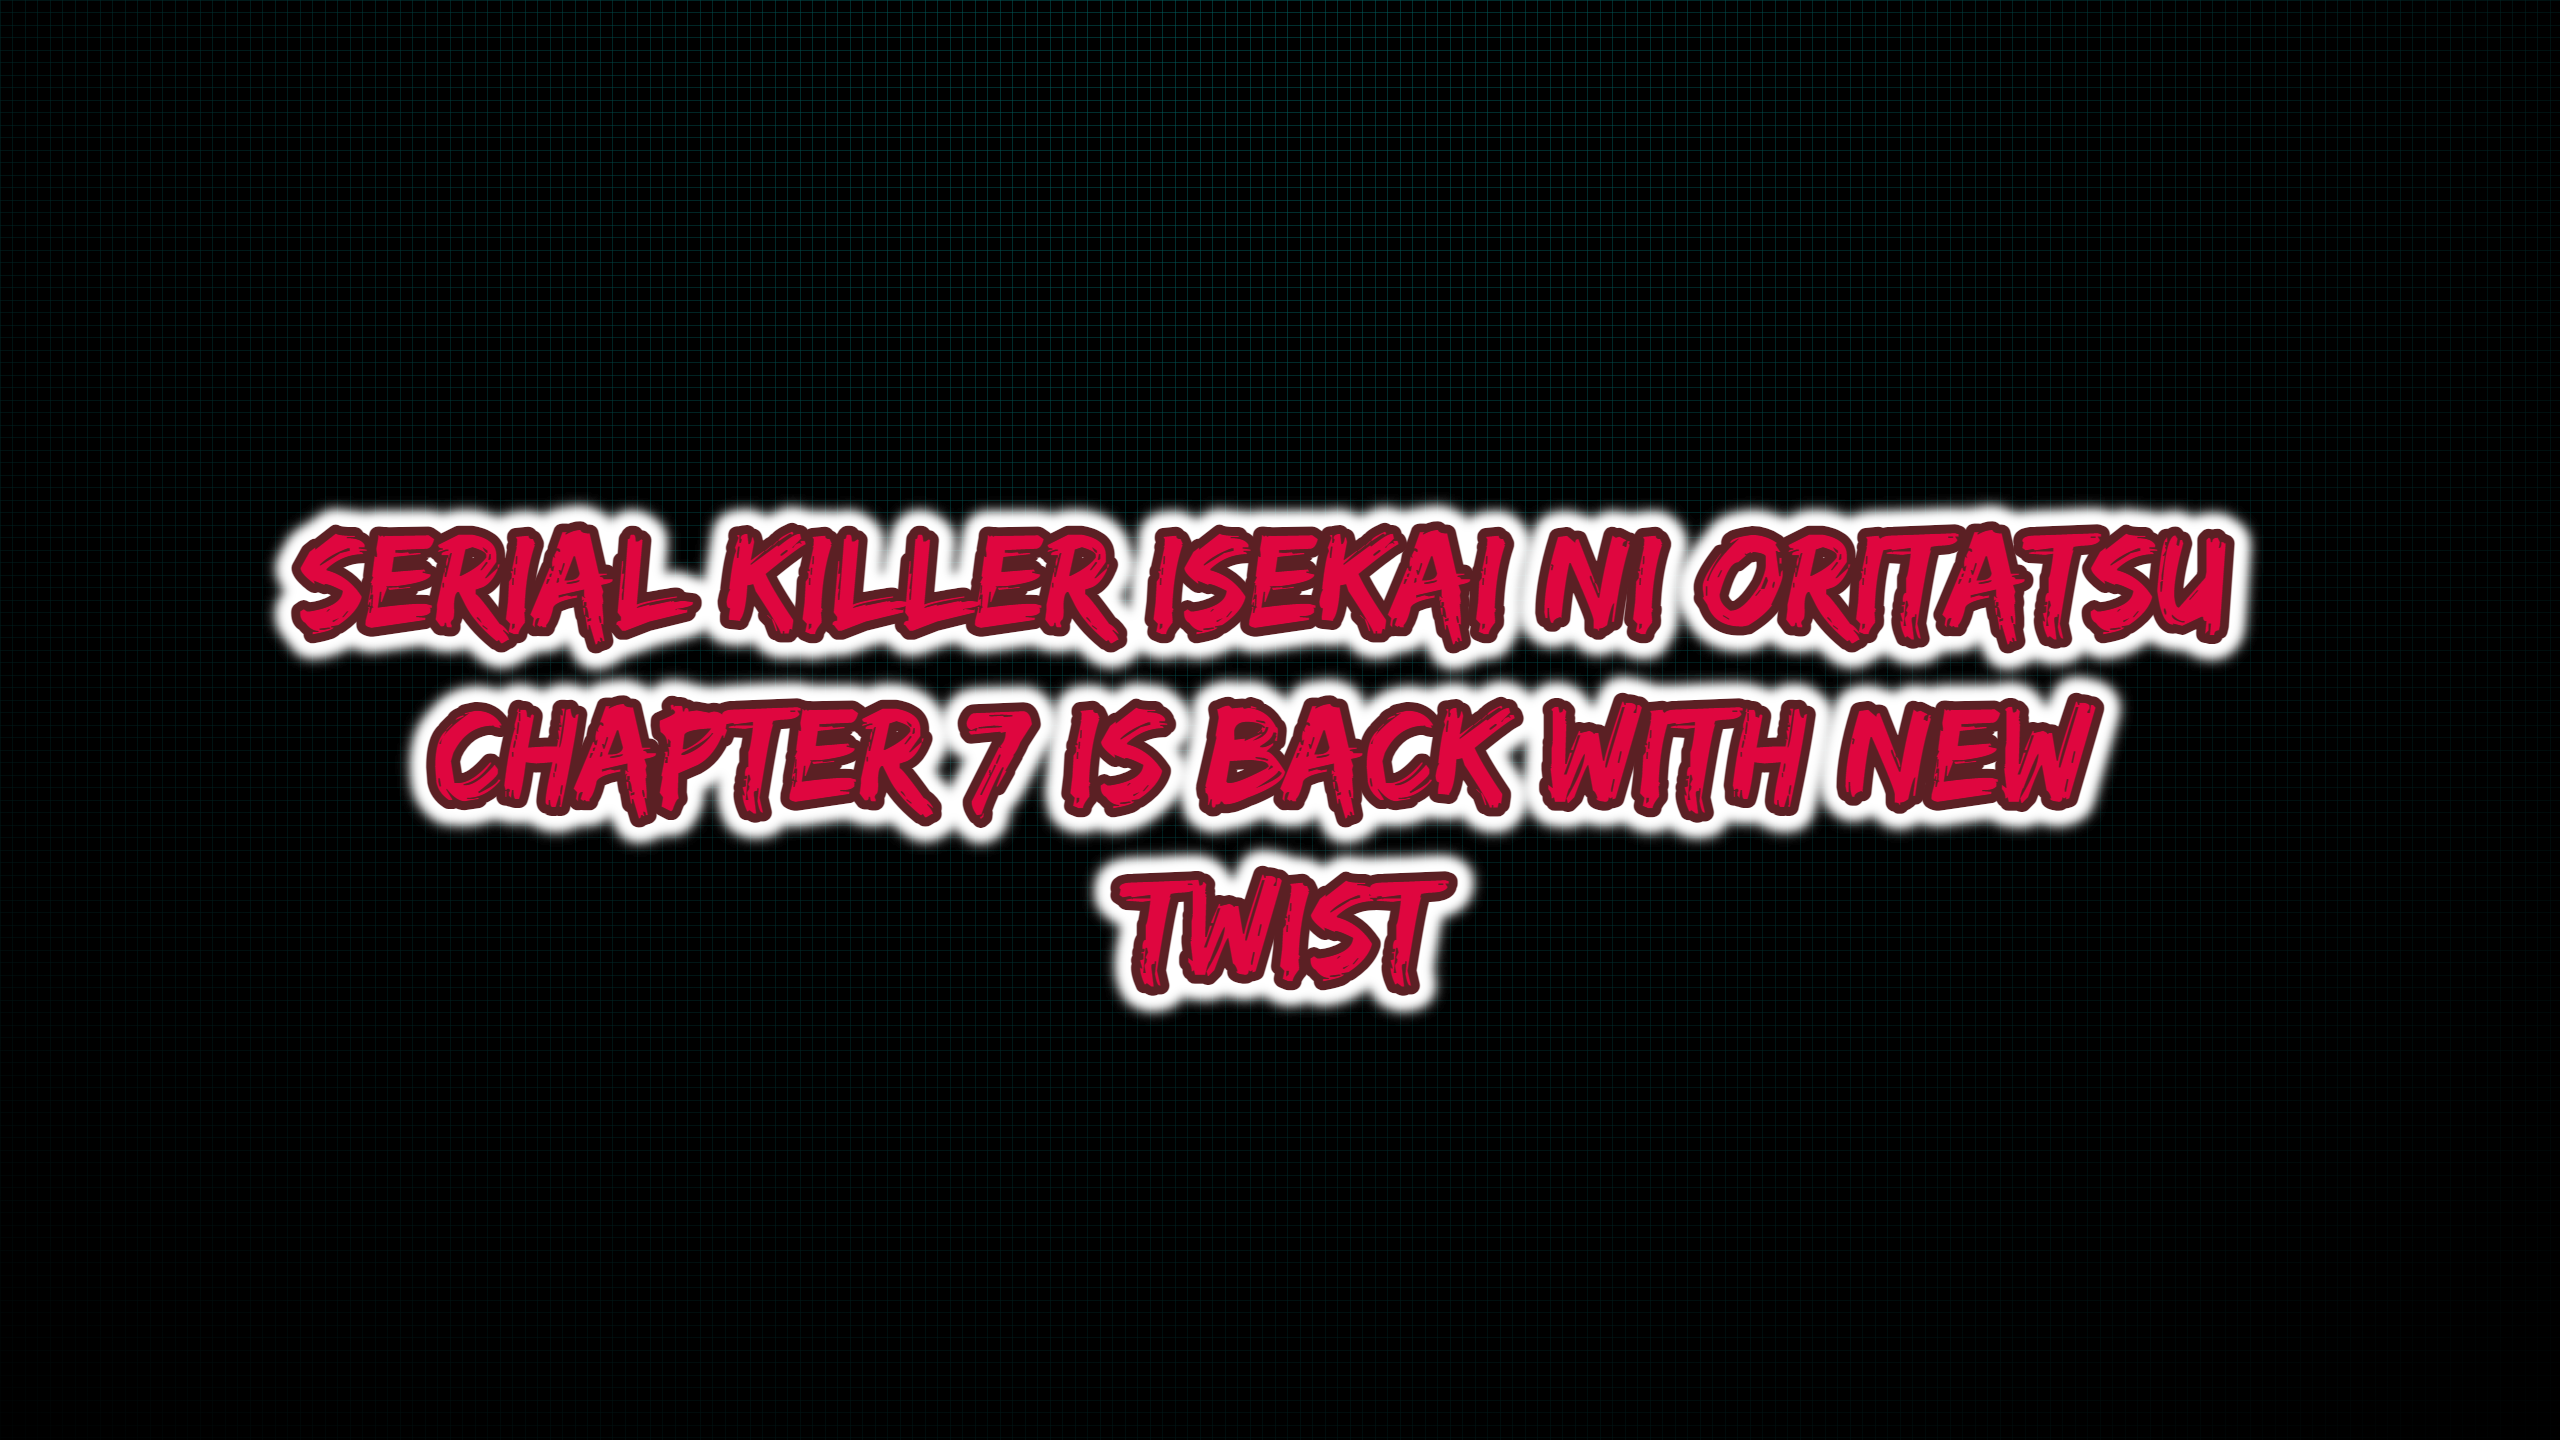 Serial killer isekai ni oritatsu chapter 7 is Back with new Twist